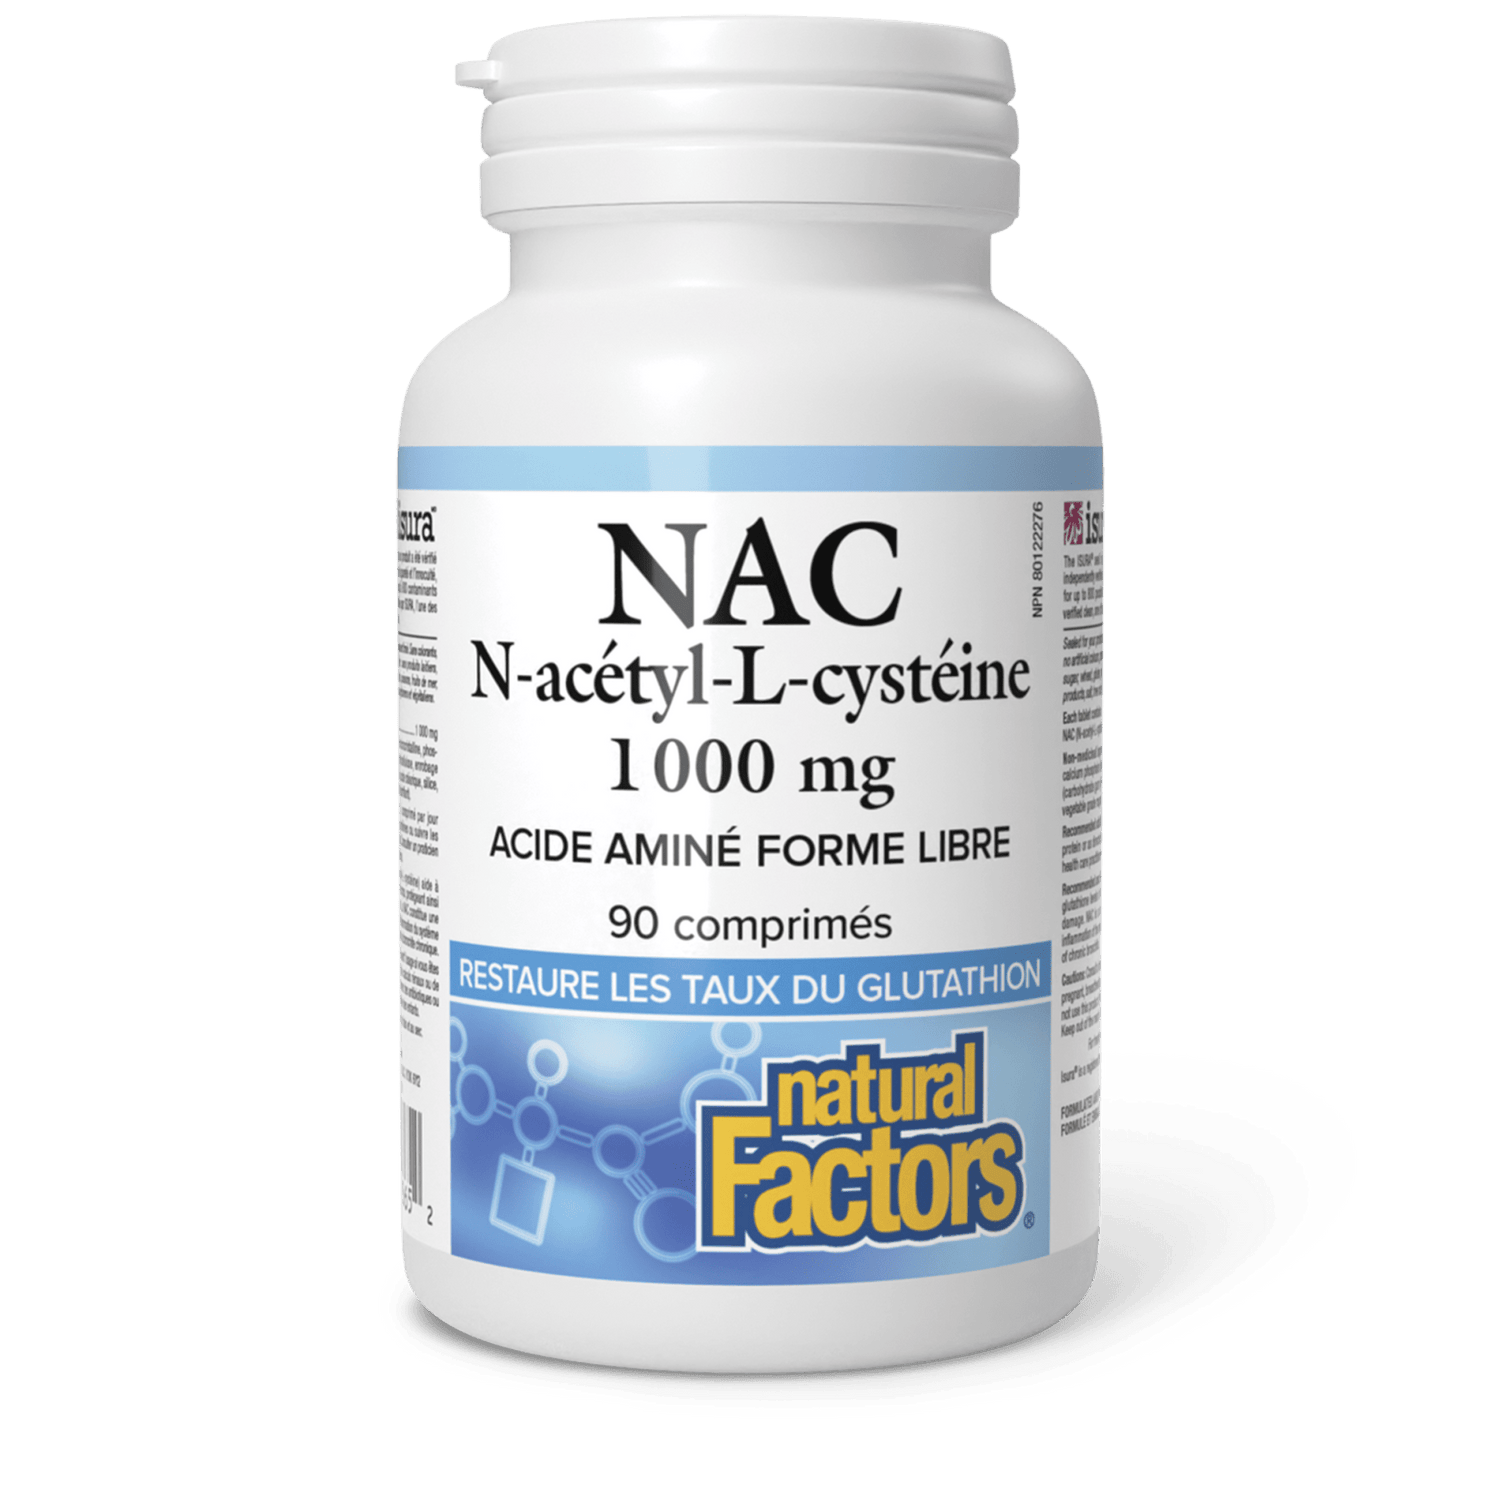 N-acétyl-L-cystéine 1 000 mg, Natural Factors|v|image|2865